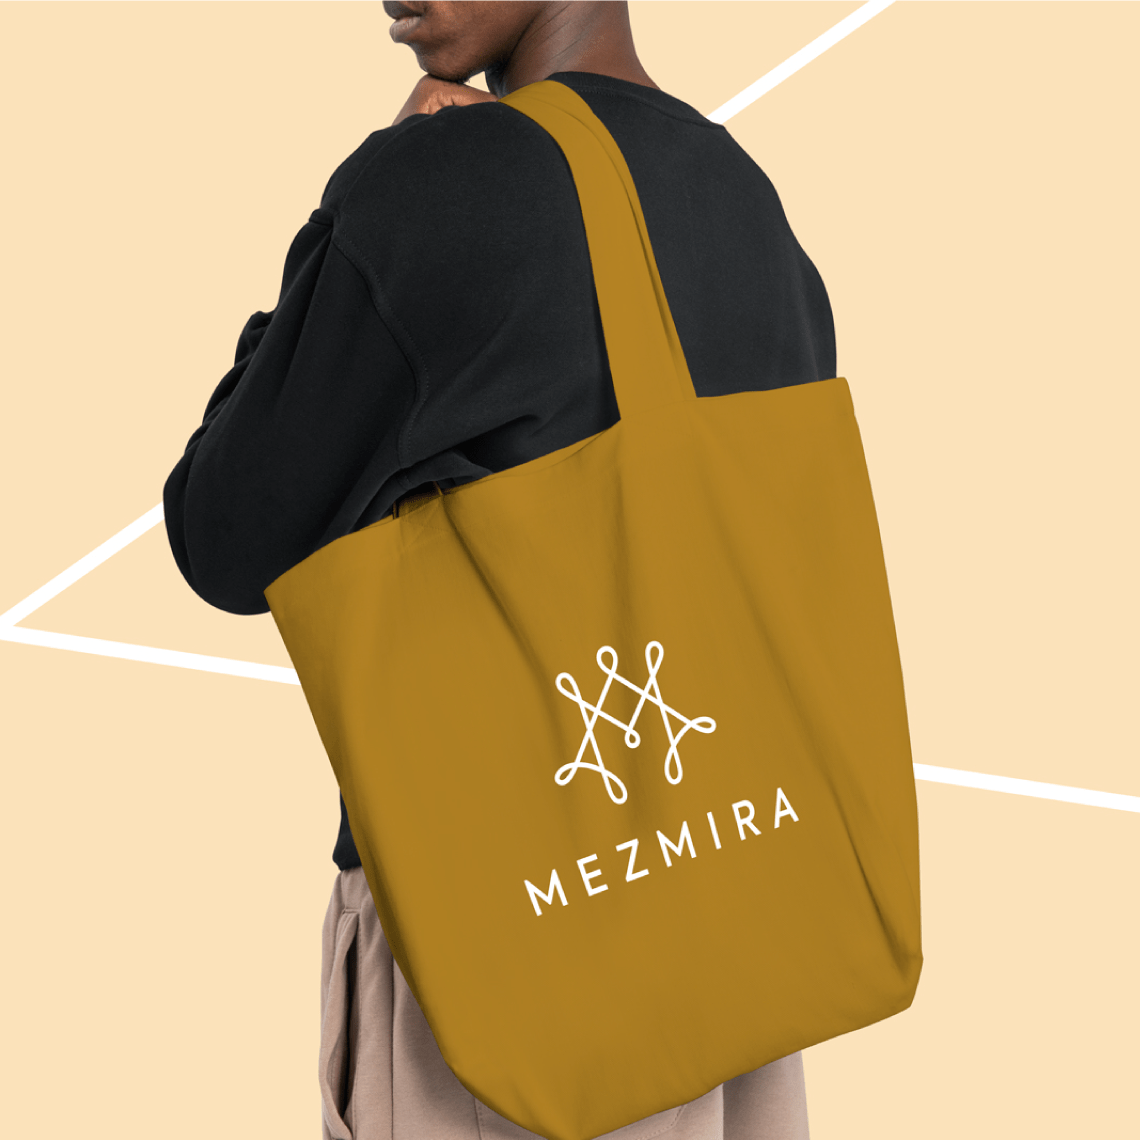 Mezmira logo applied on an elegant ochre-colored women's handbag